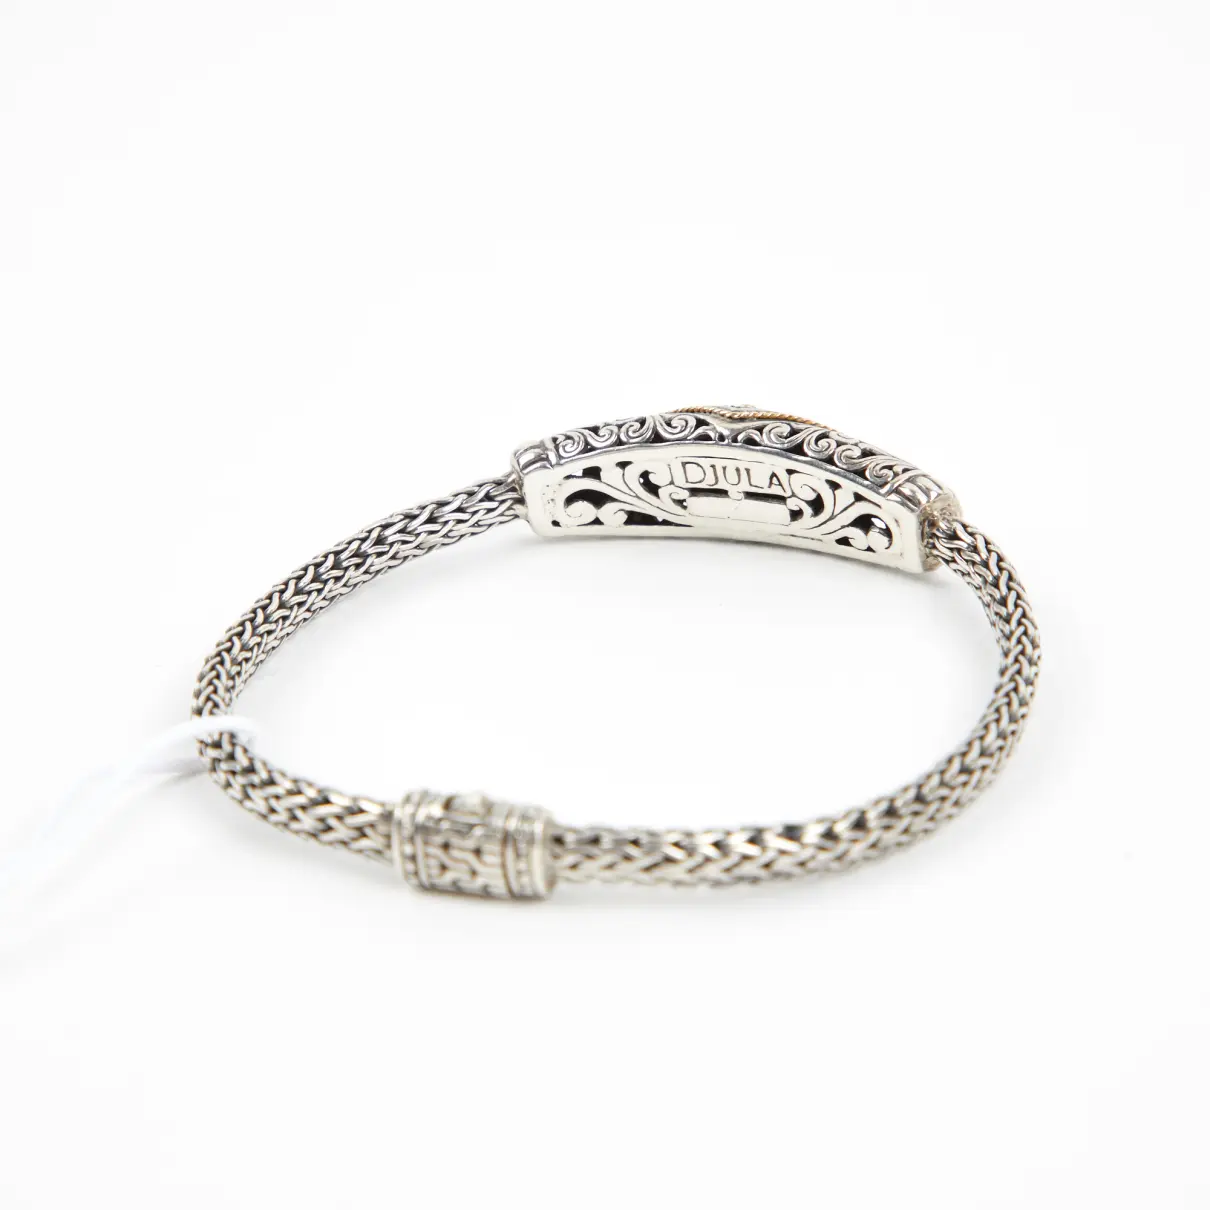 Buy Djula Silver bracelet online